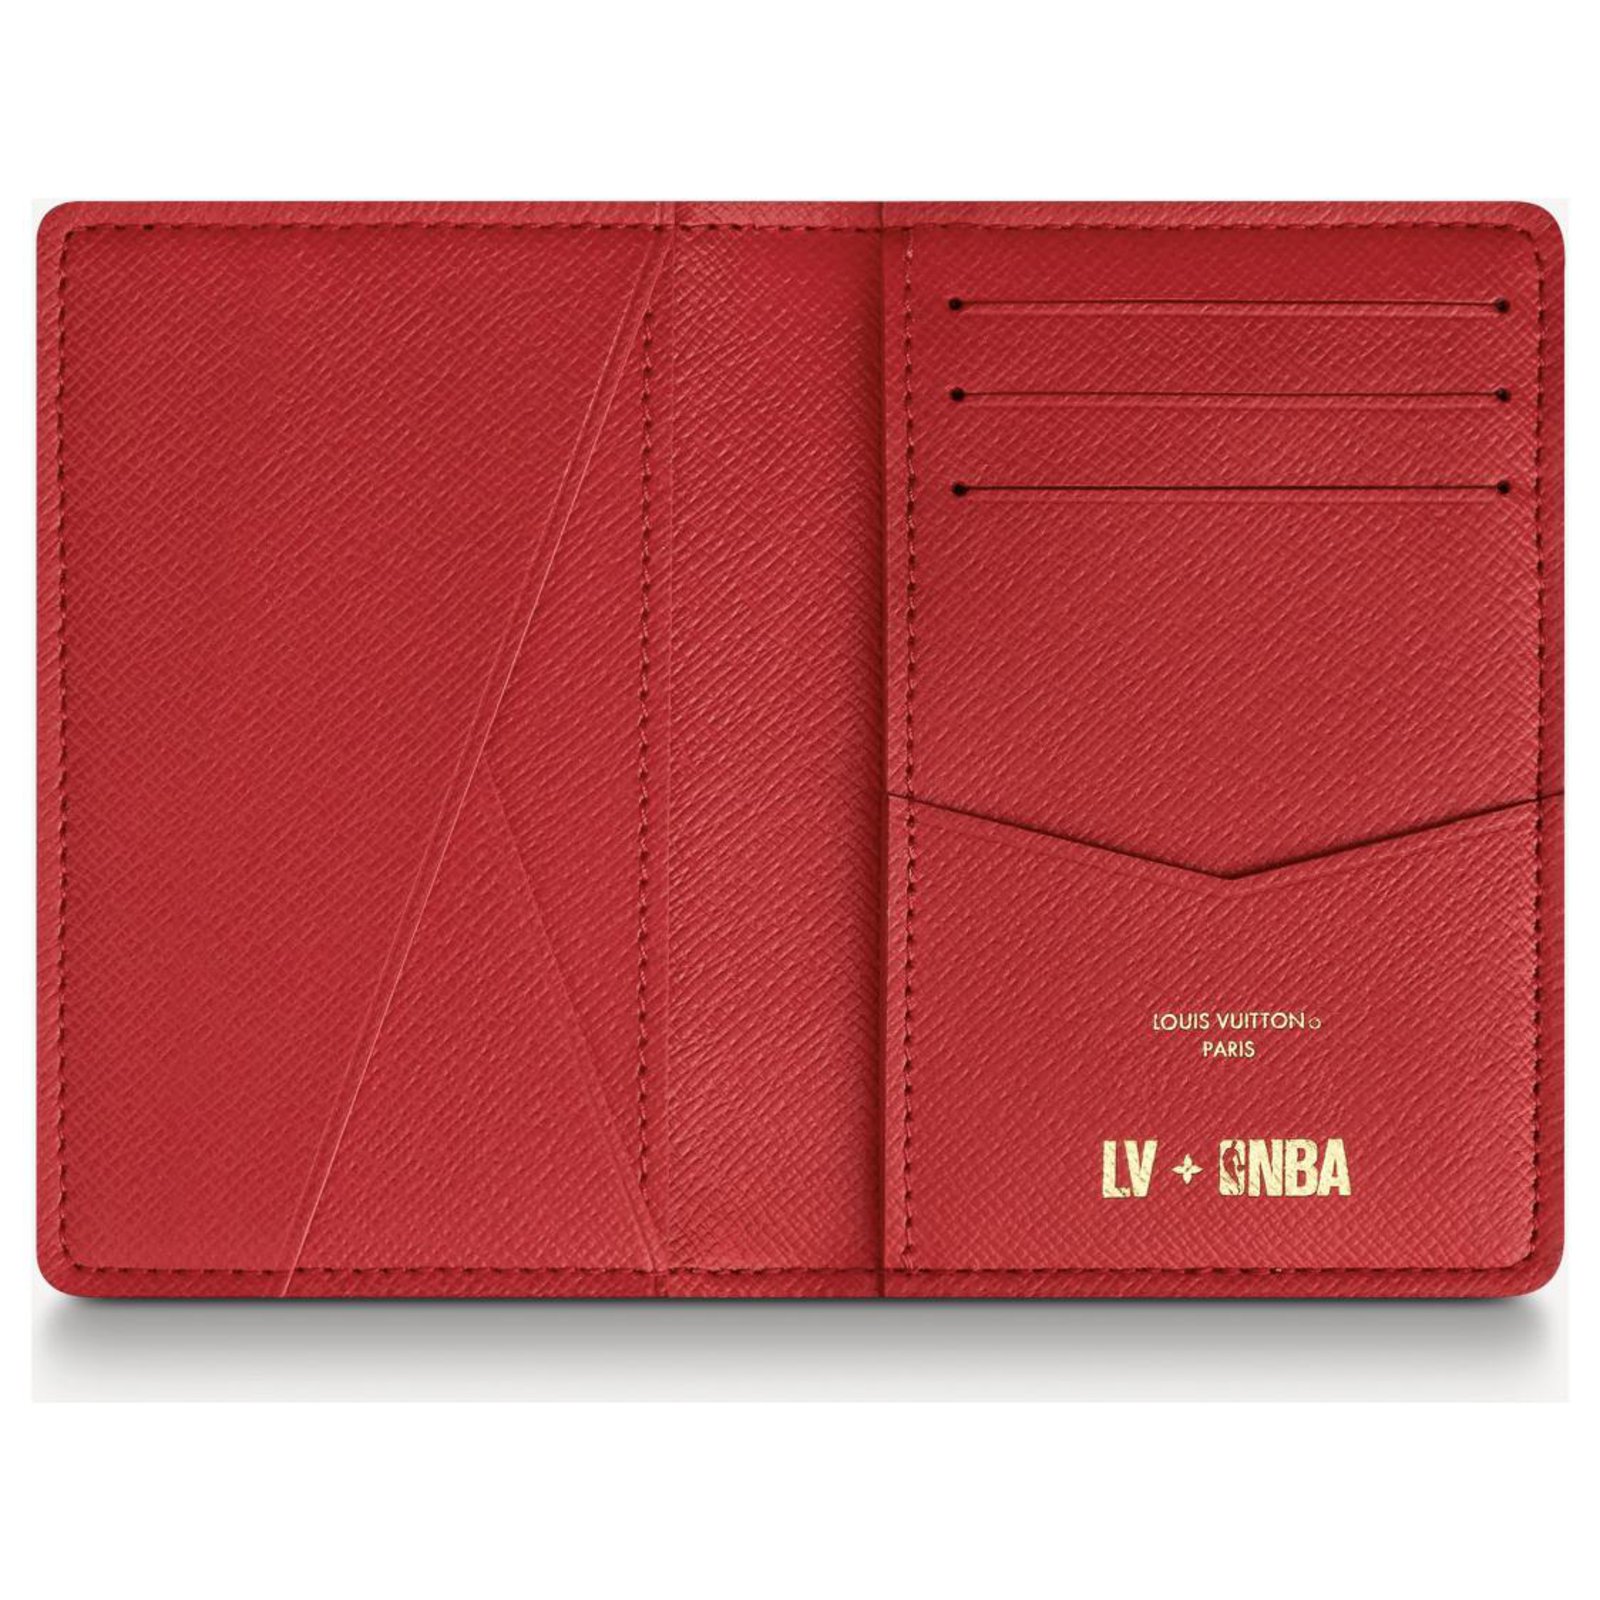 Louis Vuitton x NBA Pocket Organizer Blue Wallet